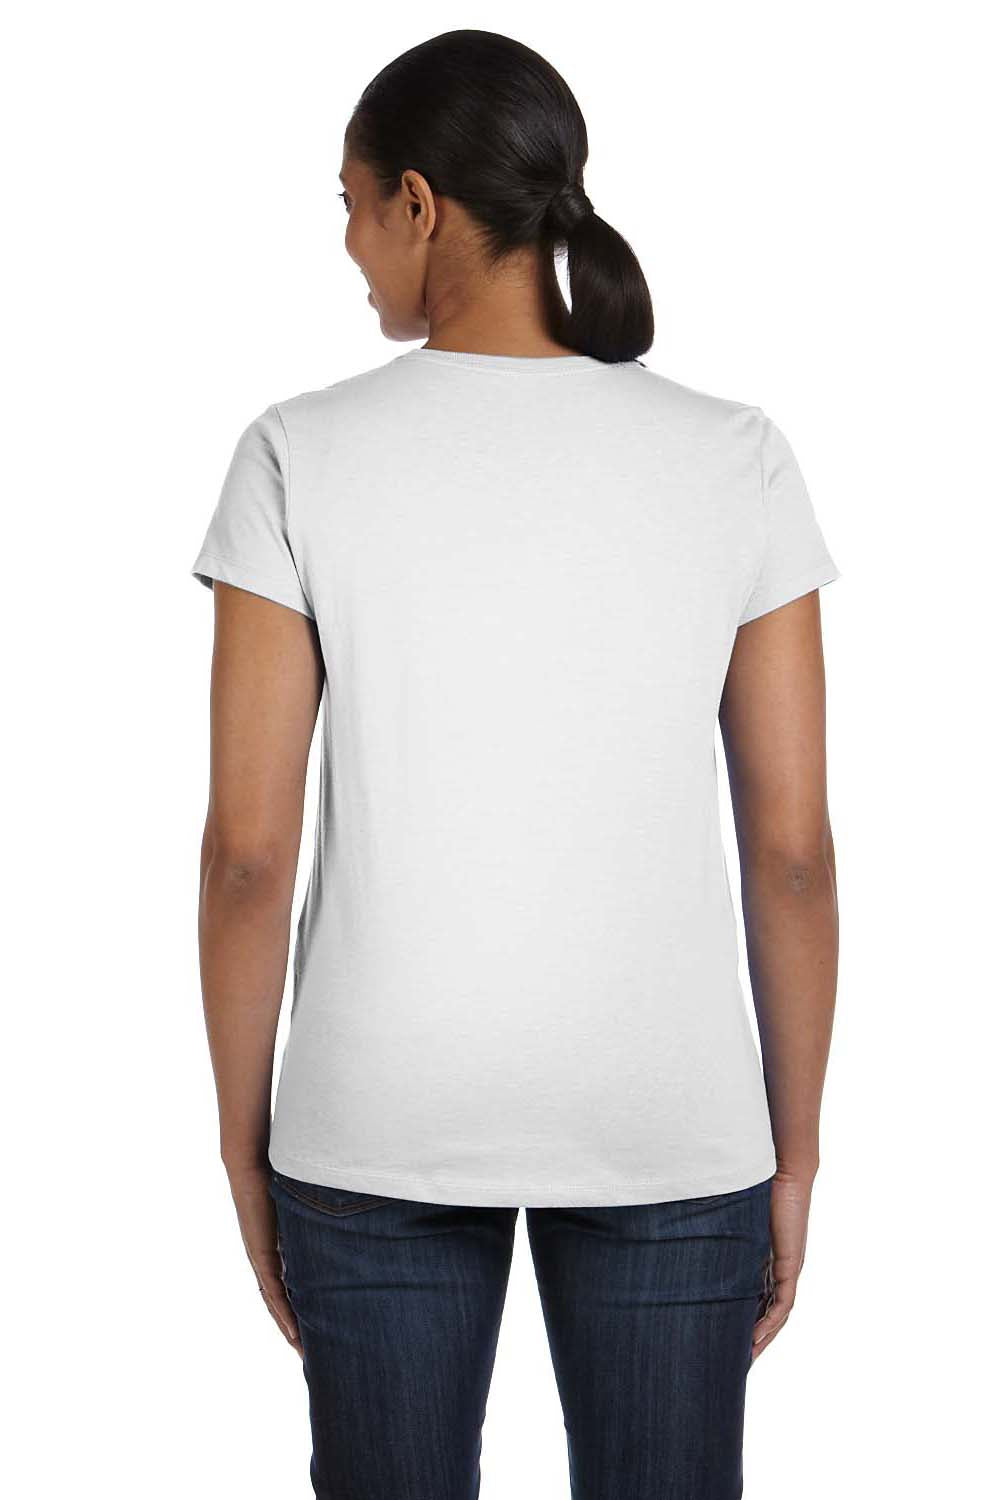 Hanes 5680 Womens ComfortSoft Short Sleeve Crewneck T-Shirt White Back